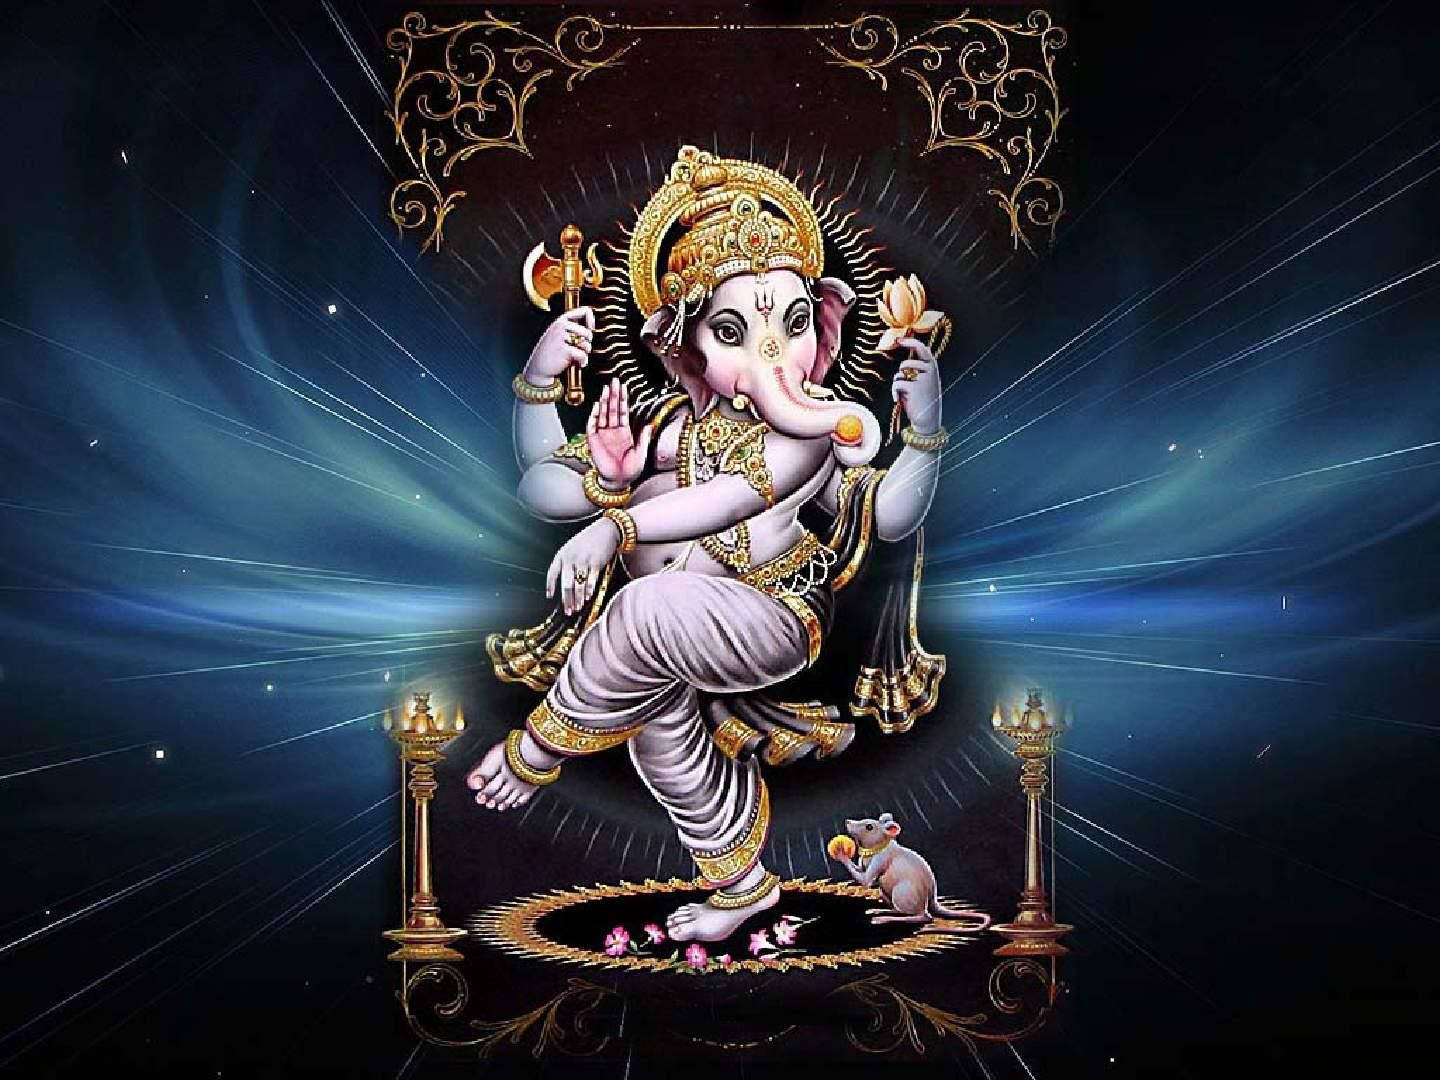 Download Ganesh 3d Ornate Poster Wallpaper | Wallpapers.com